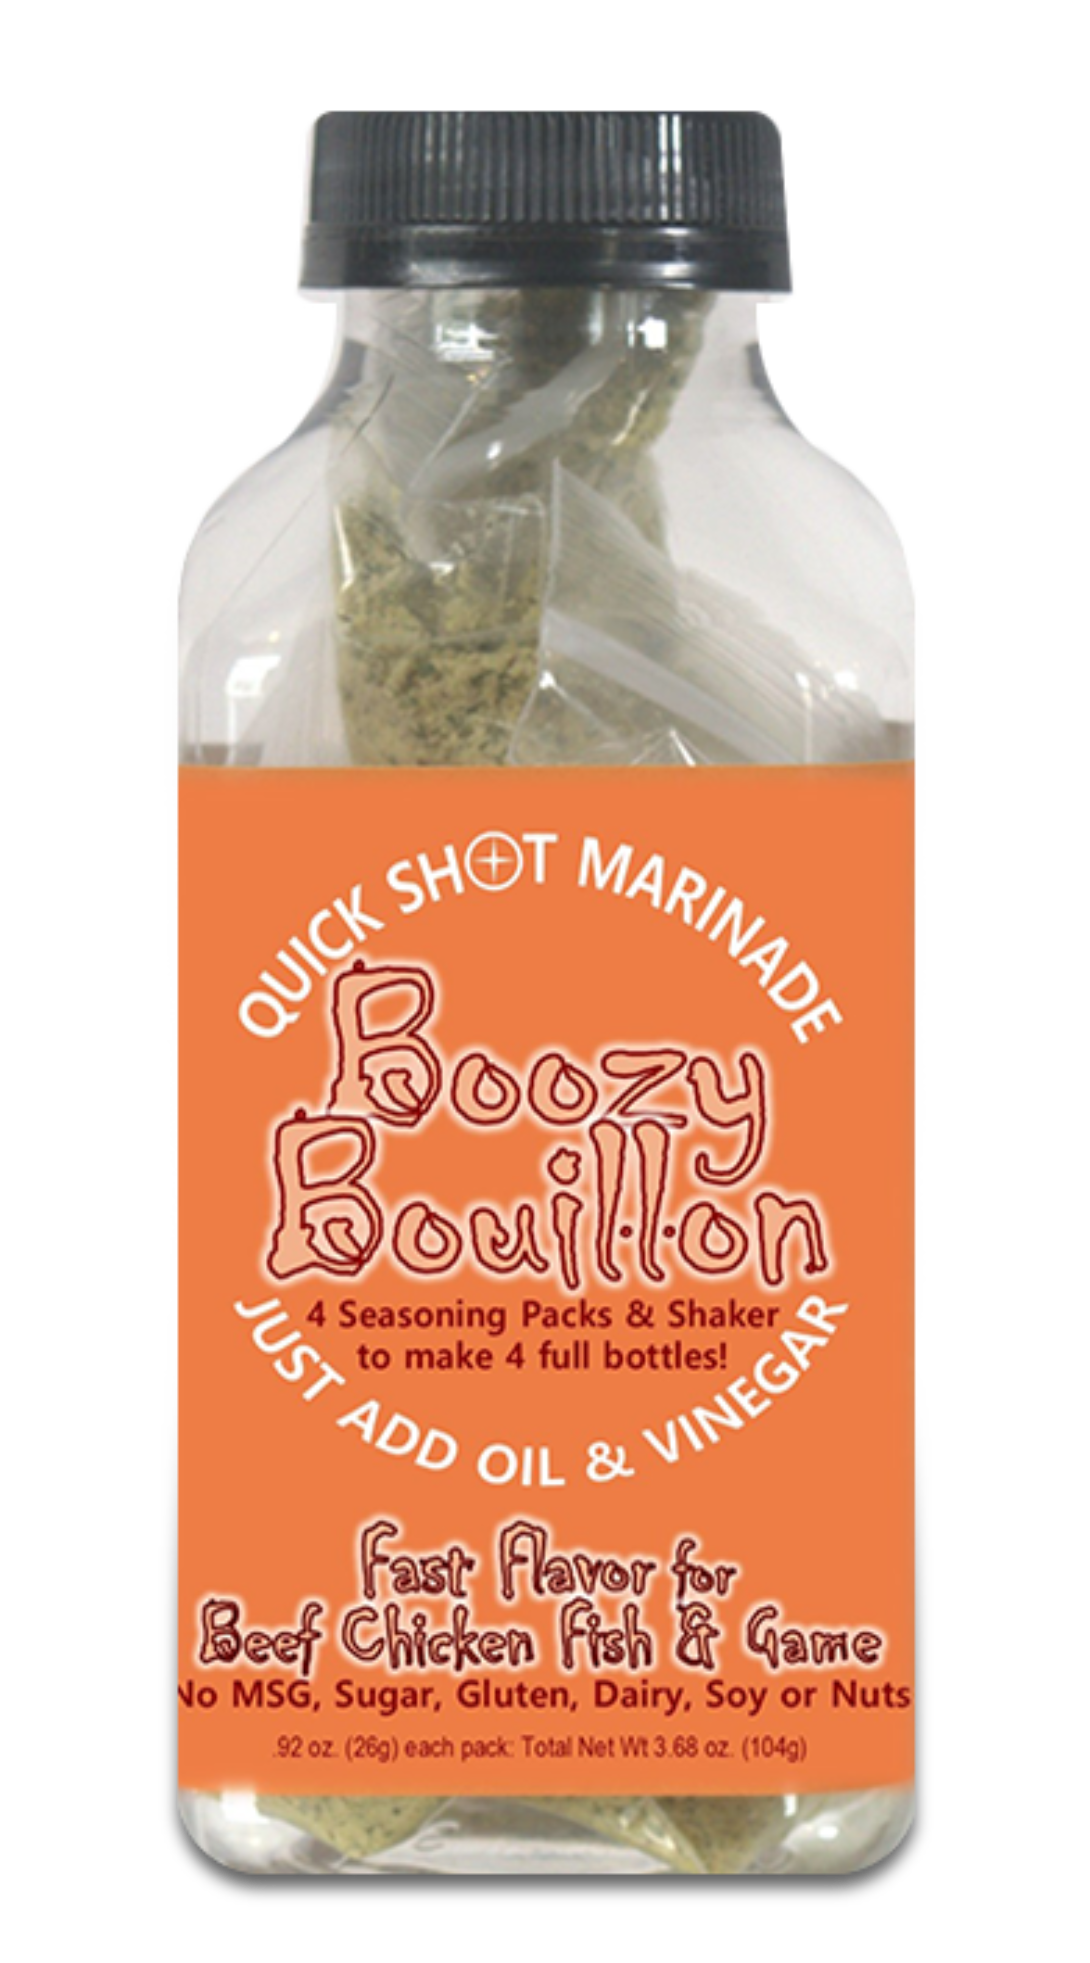 BOOZY BOUILLON Seasoning Packs & Shaker to make 4 Bottles of Fast Flavor Marinade